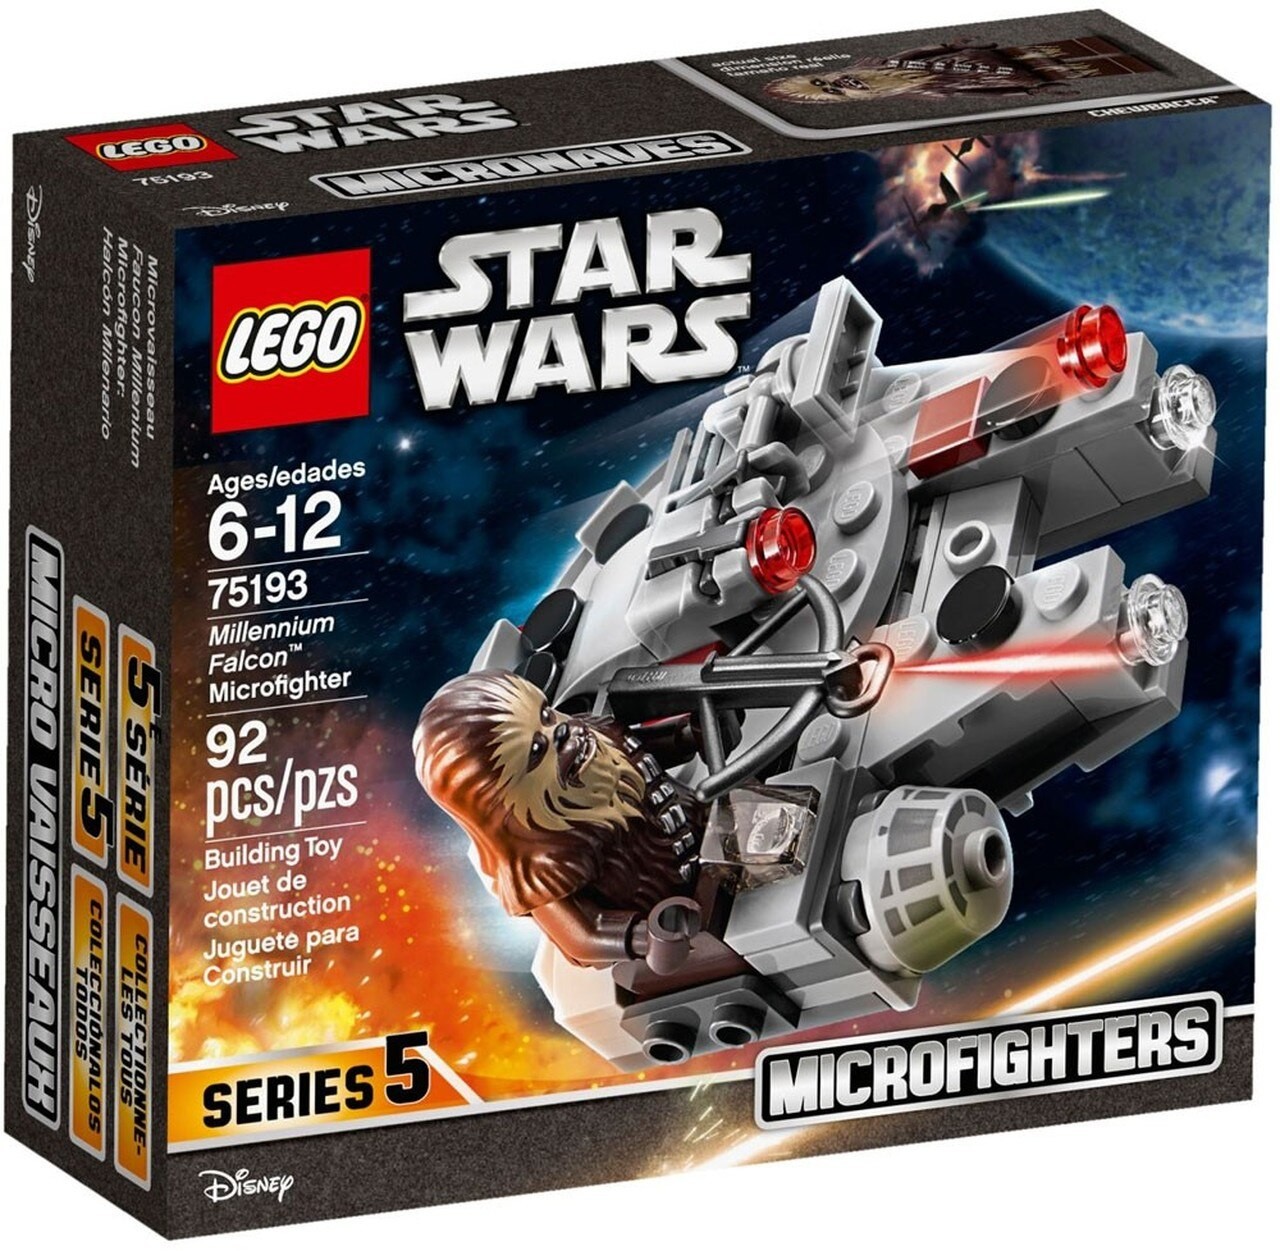 LEGO Star Wars Microfighters Series 5 Millennium Falcon Set